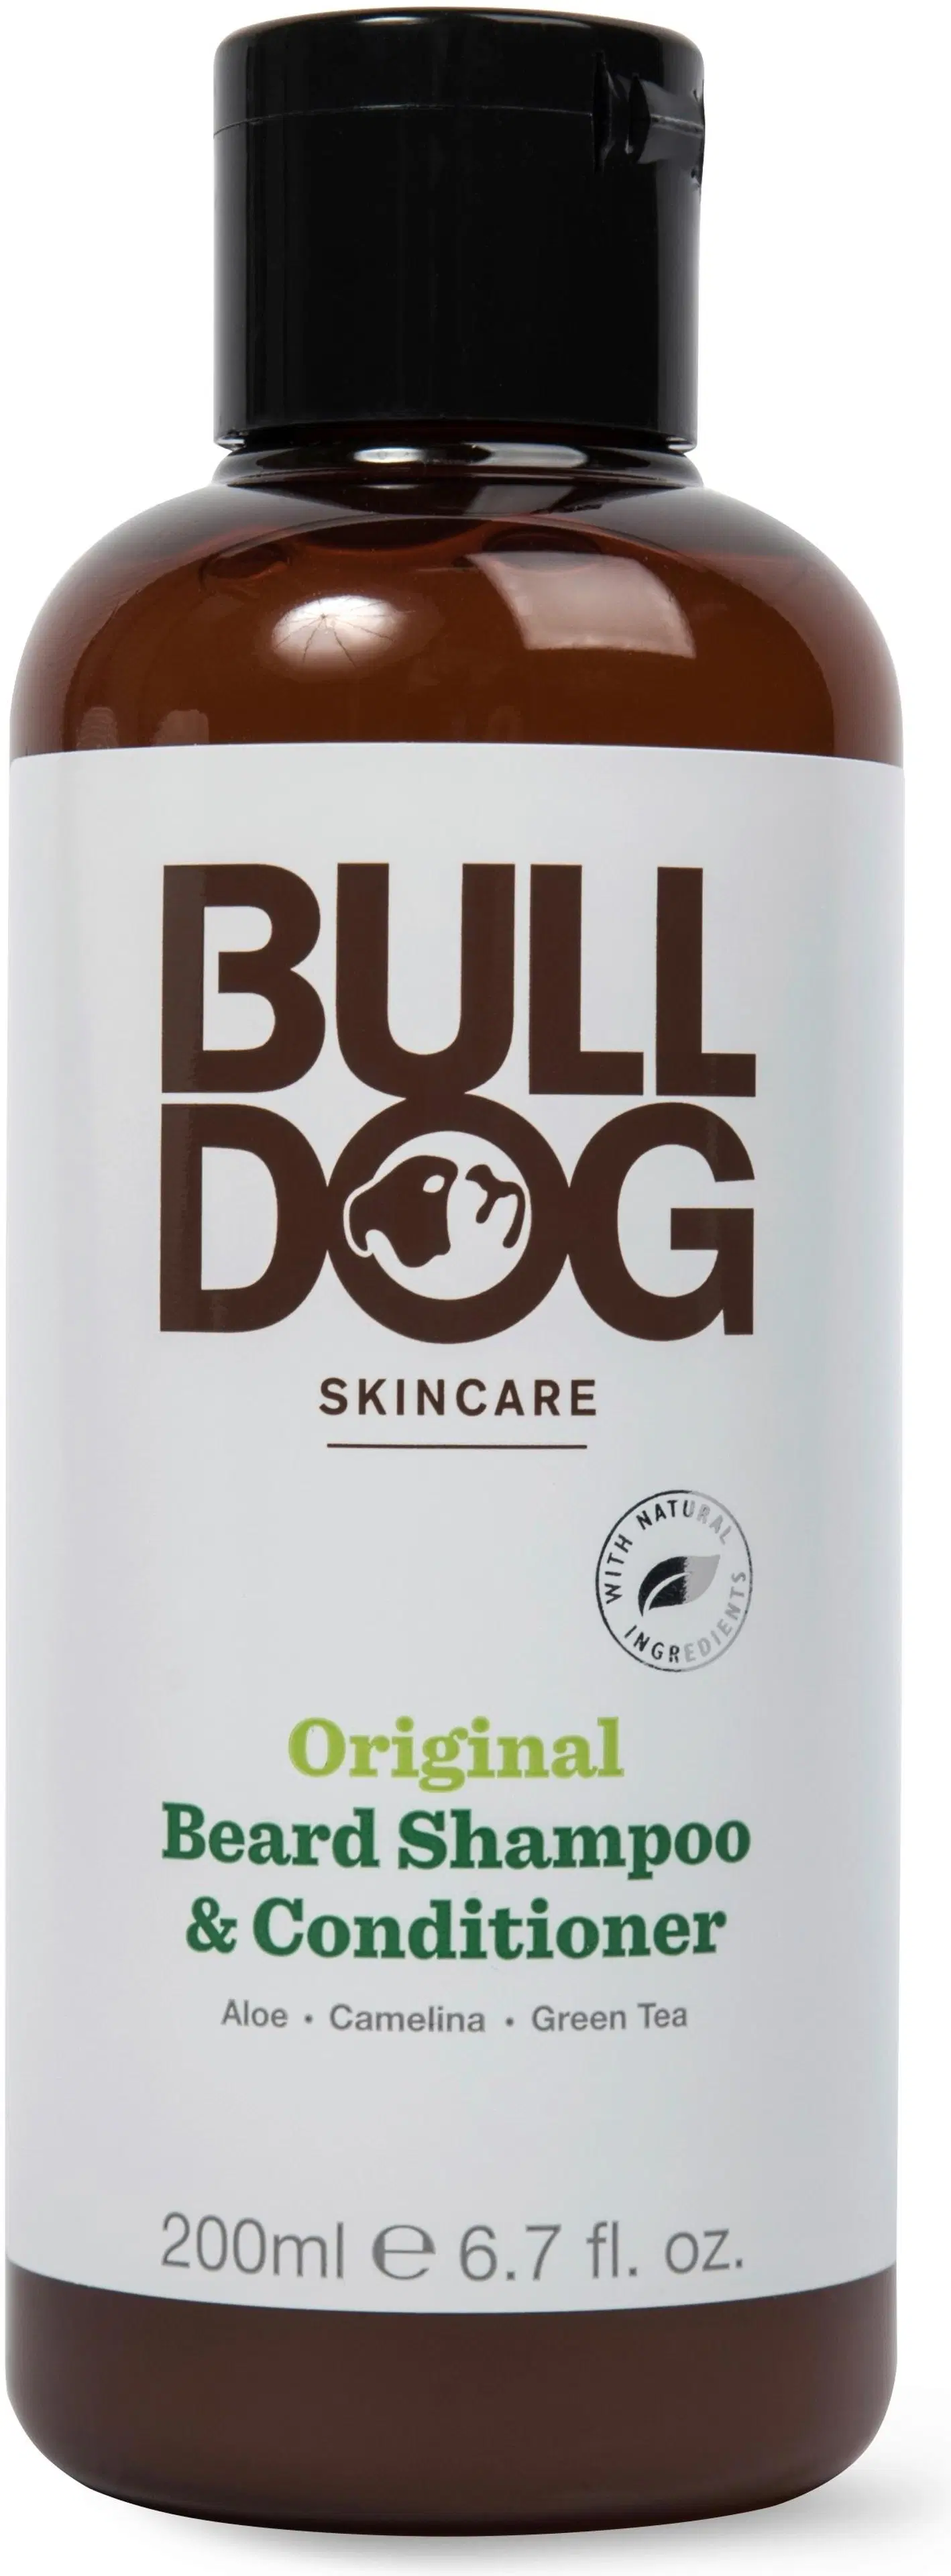 Bulldog Original partashampoo 200 ml